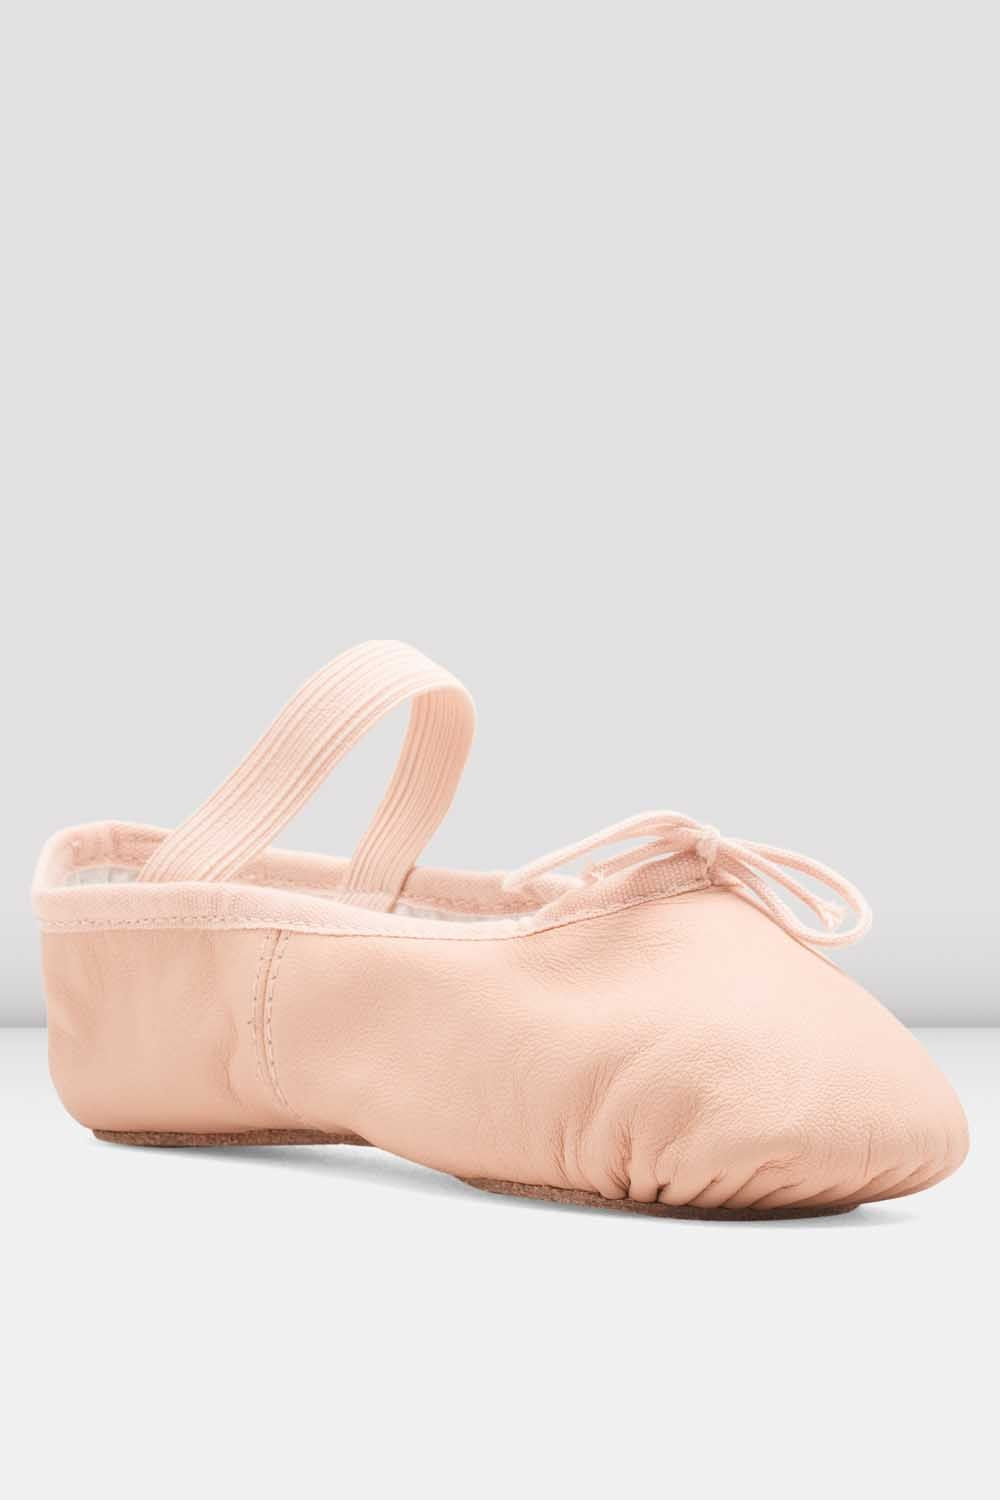 Zapatillas de ballet de cuero Arise para niñas, blancas